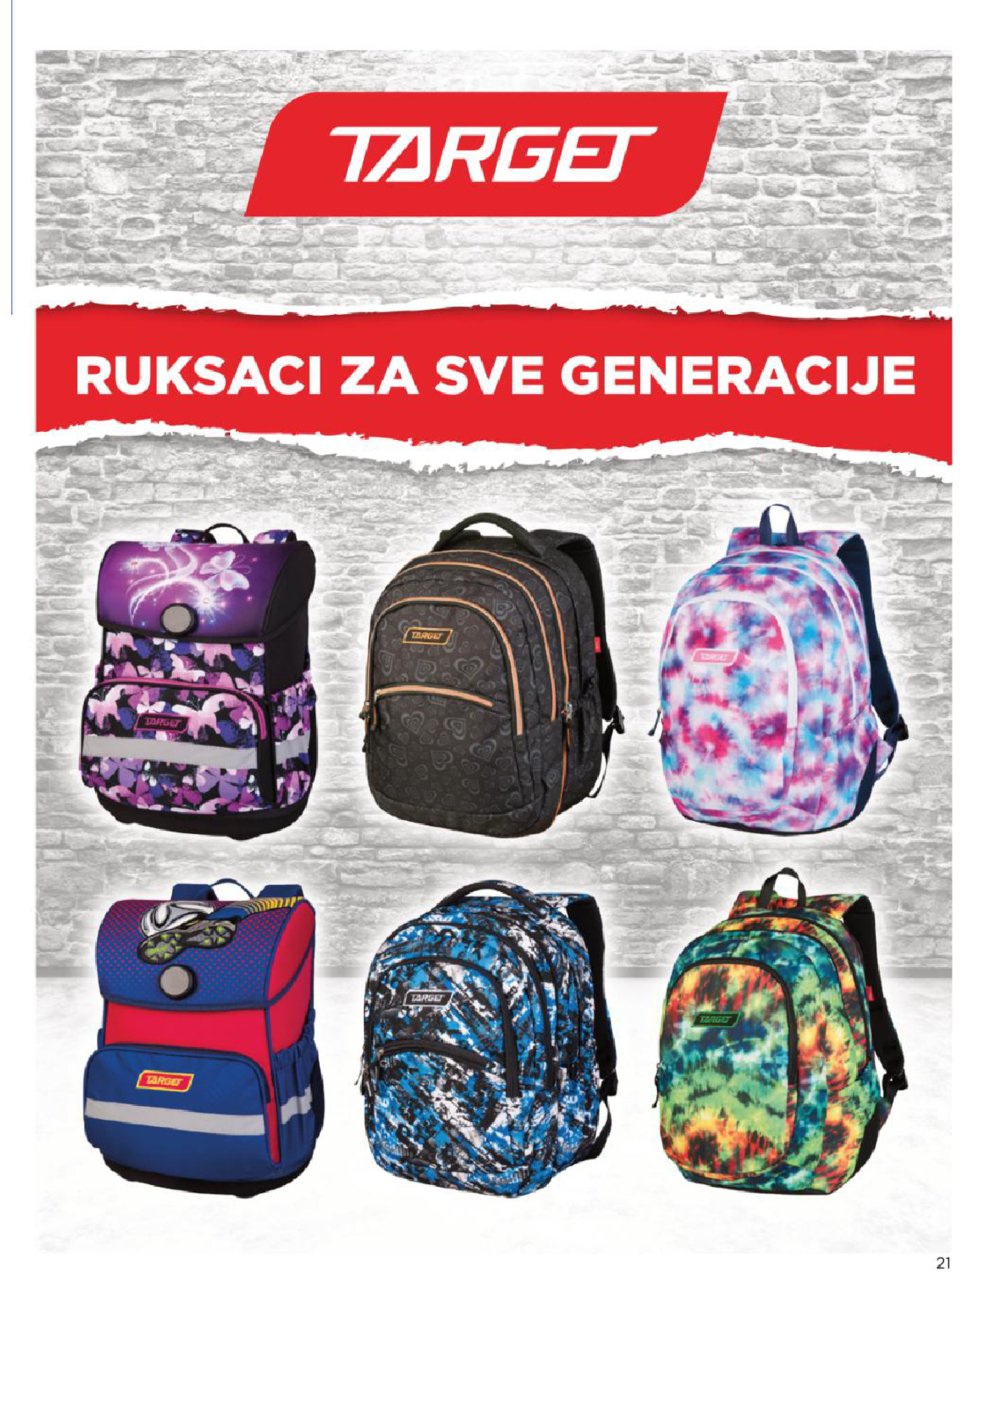 Školska knjiga katalog Akcija 01.09.-30.09.2020.